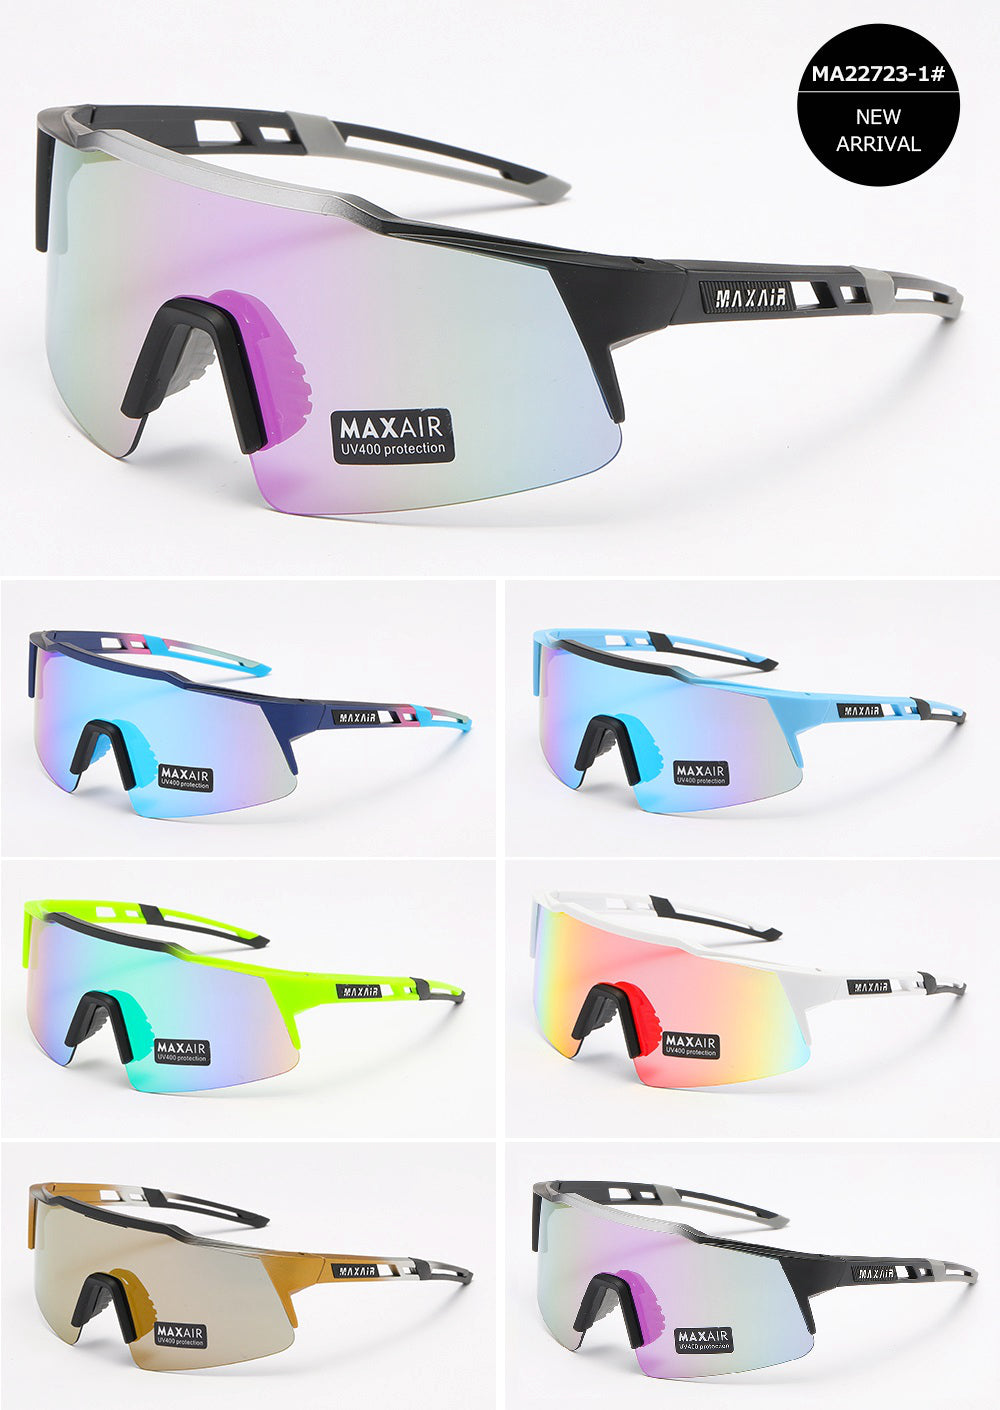 Maxair 22723-1 Sunglasses